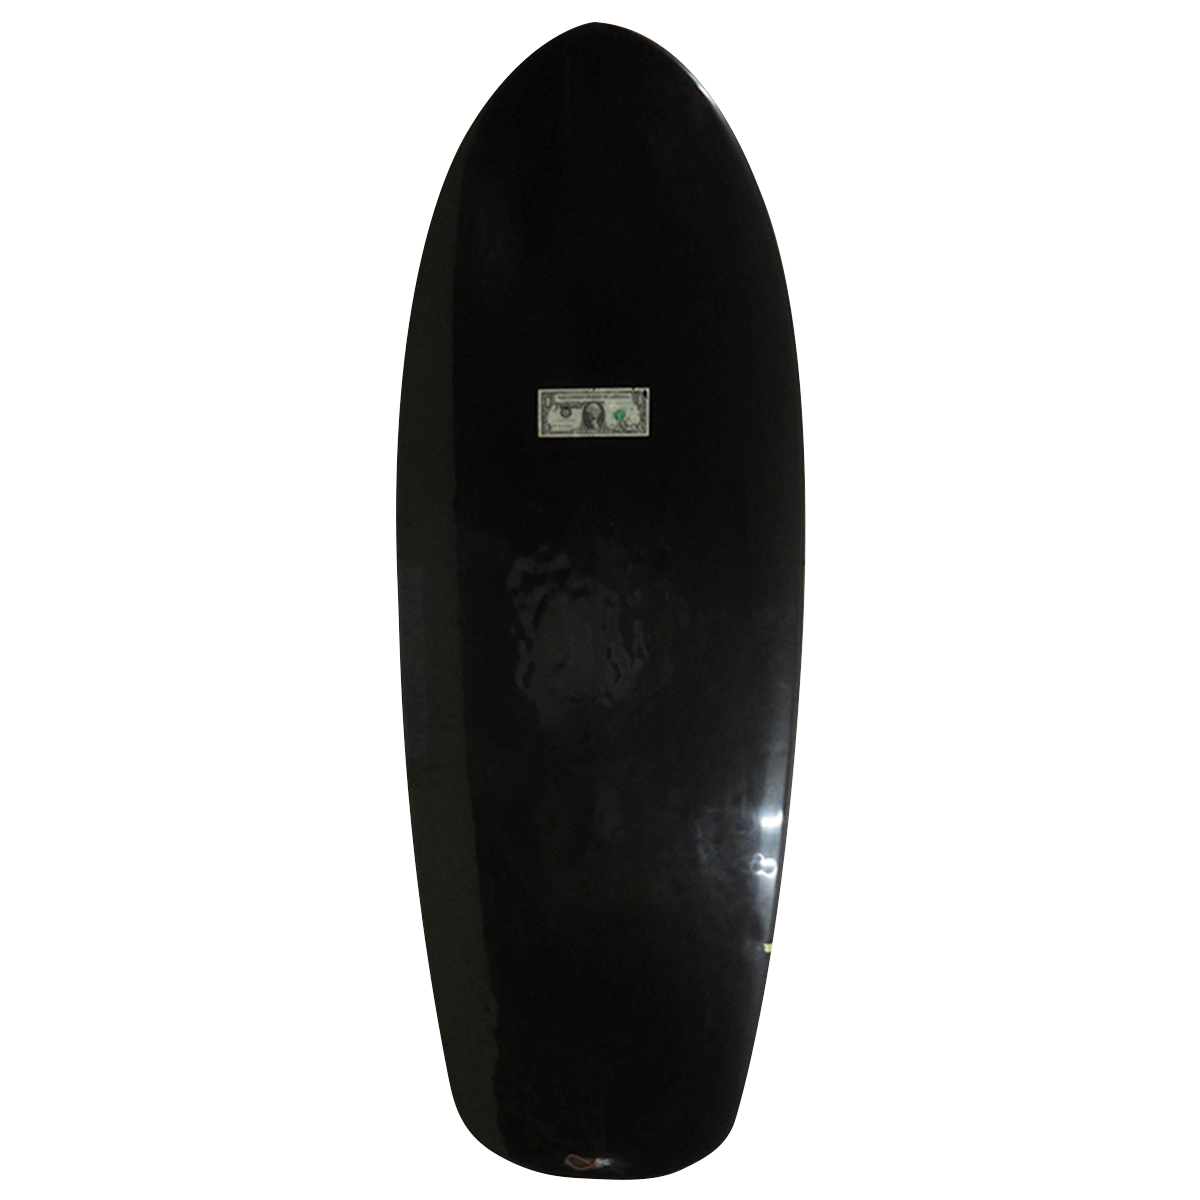 Mccallum Surfboards / 5`5 Hull Simmons Shaped By Jeff Mccallum